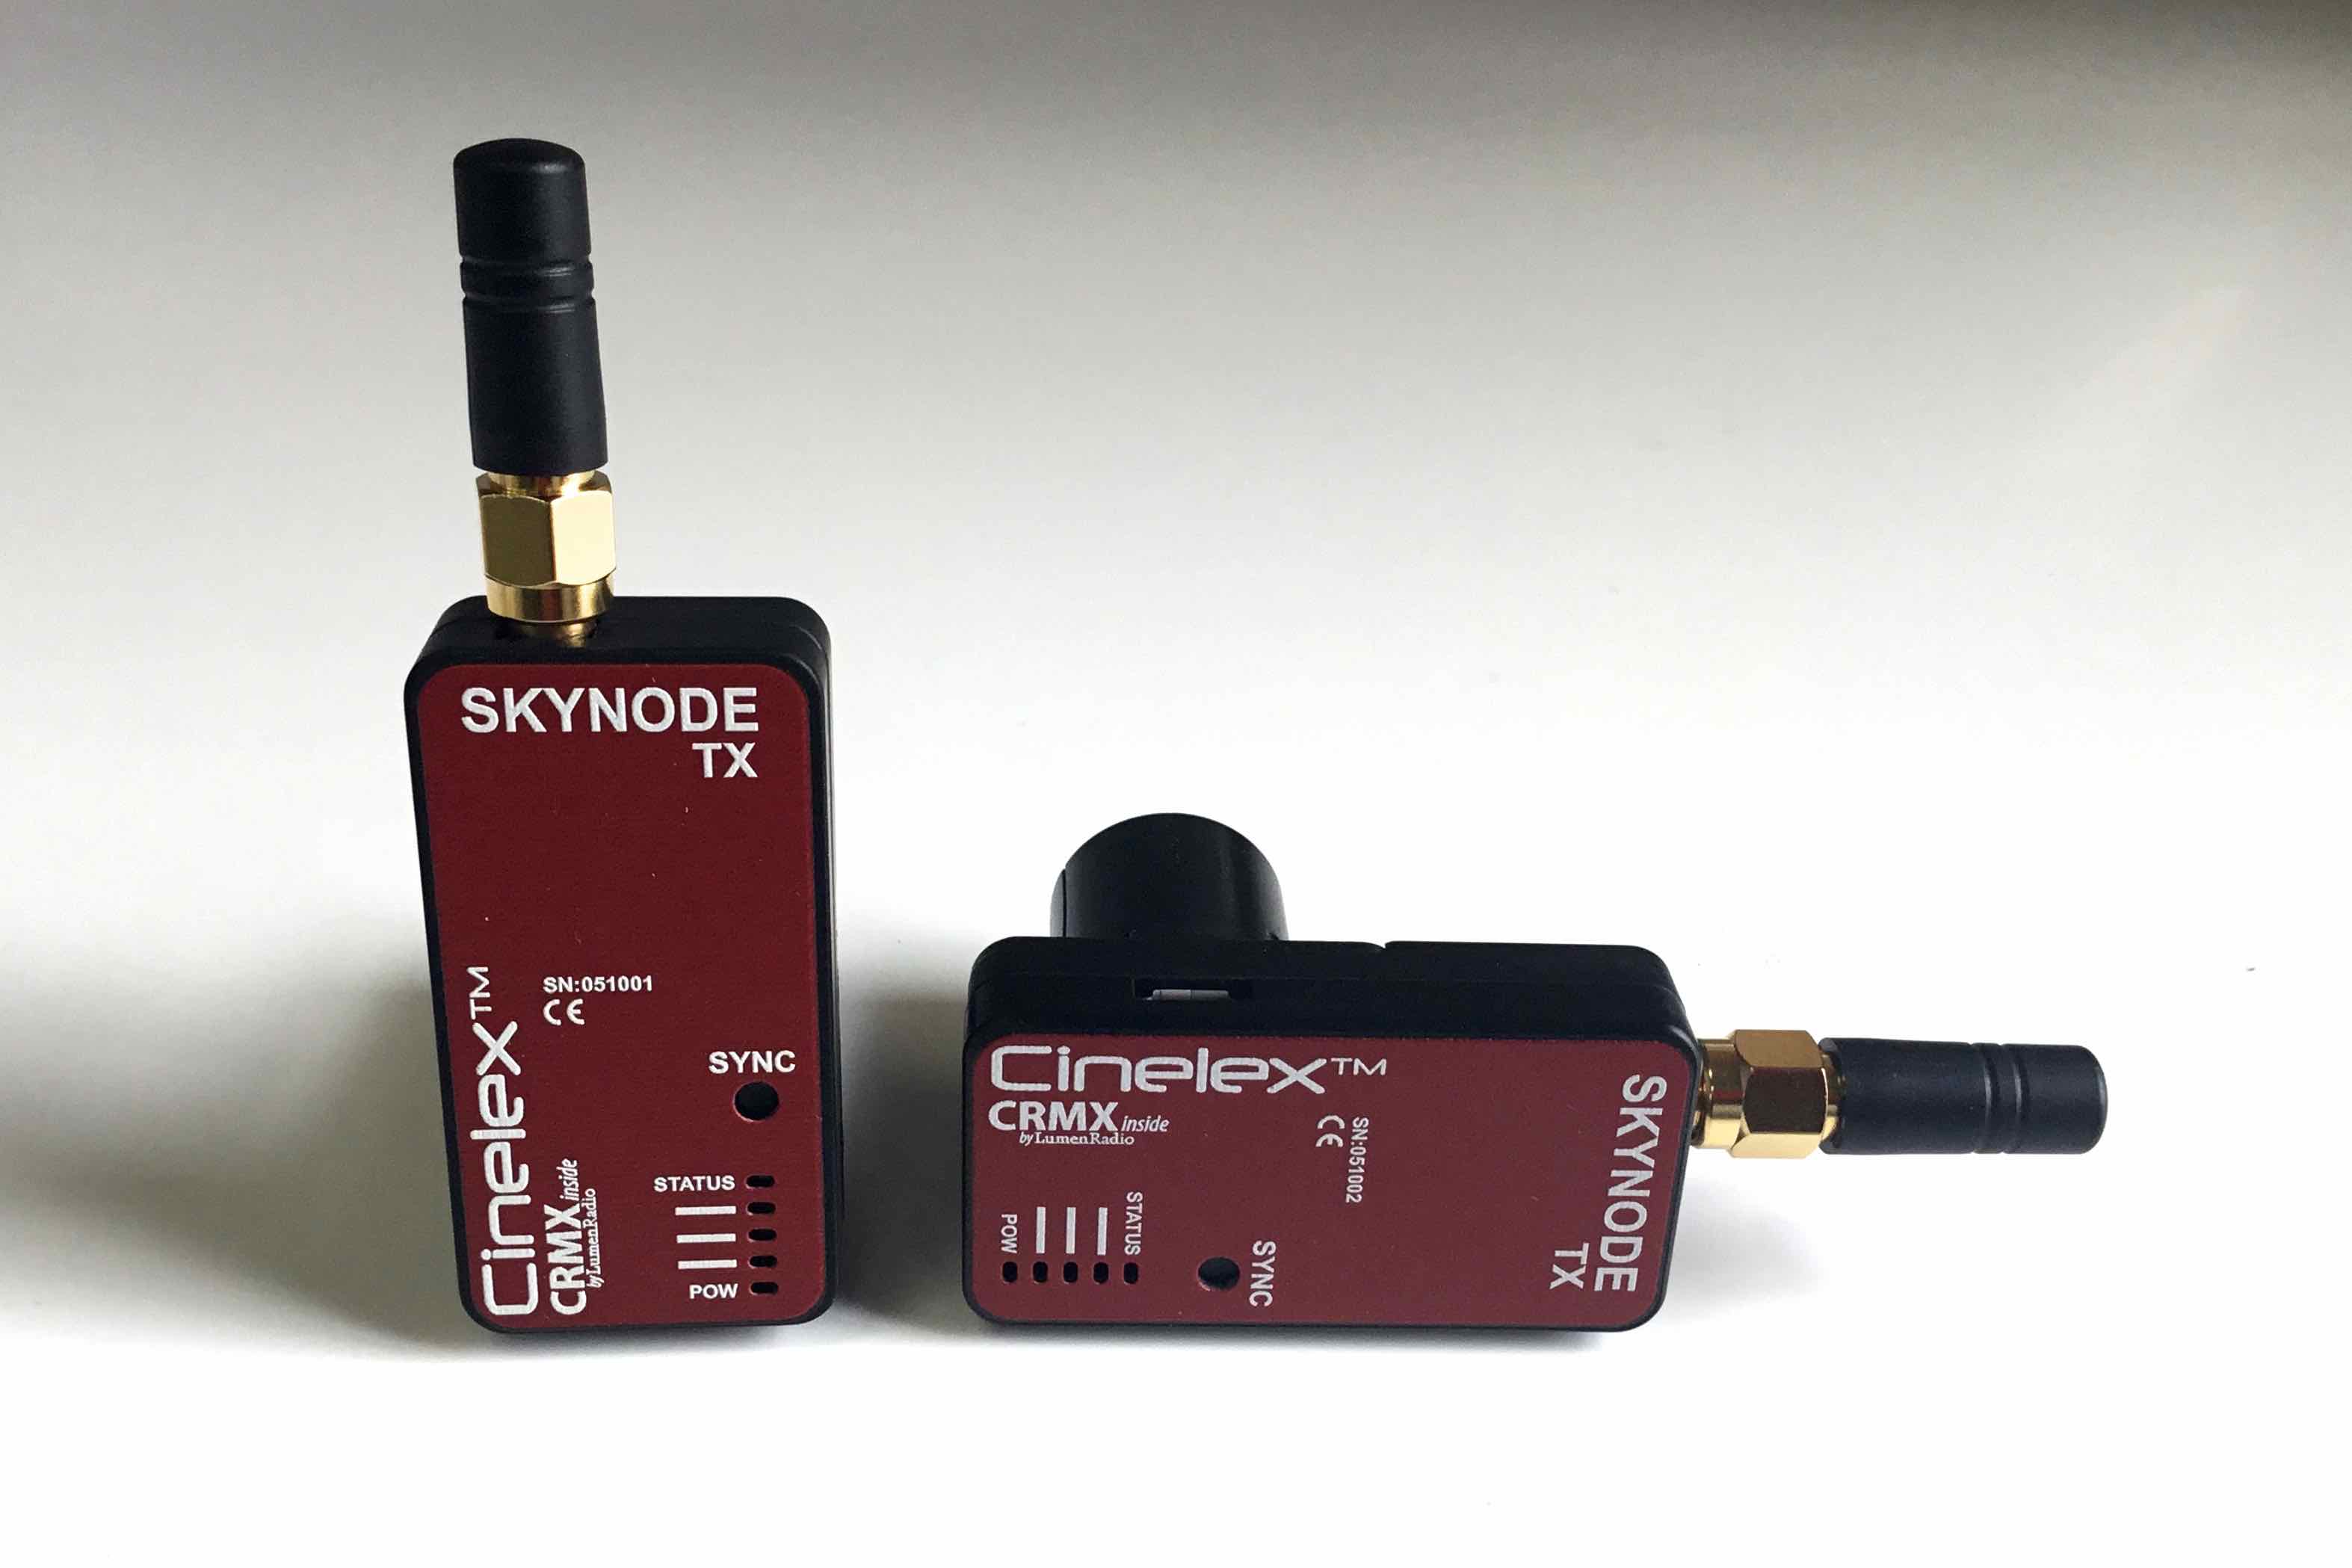 Sky Node TX micro-transmitter